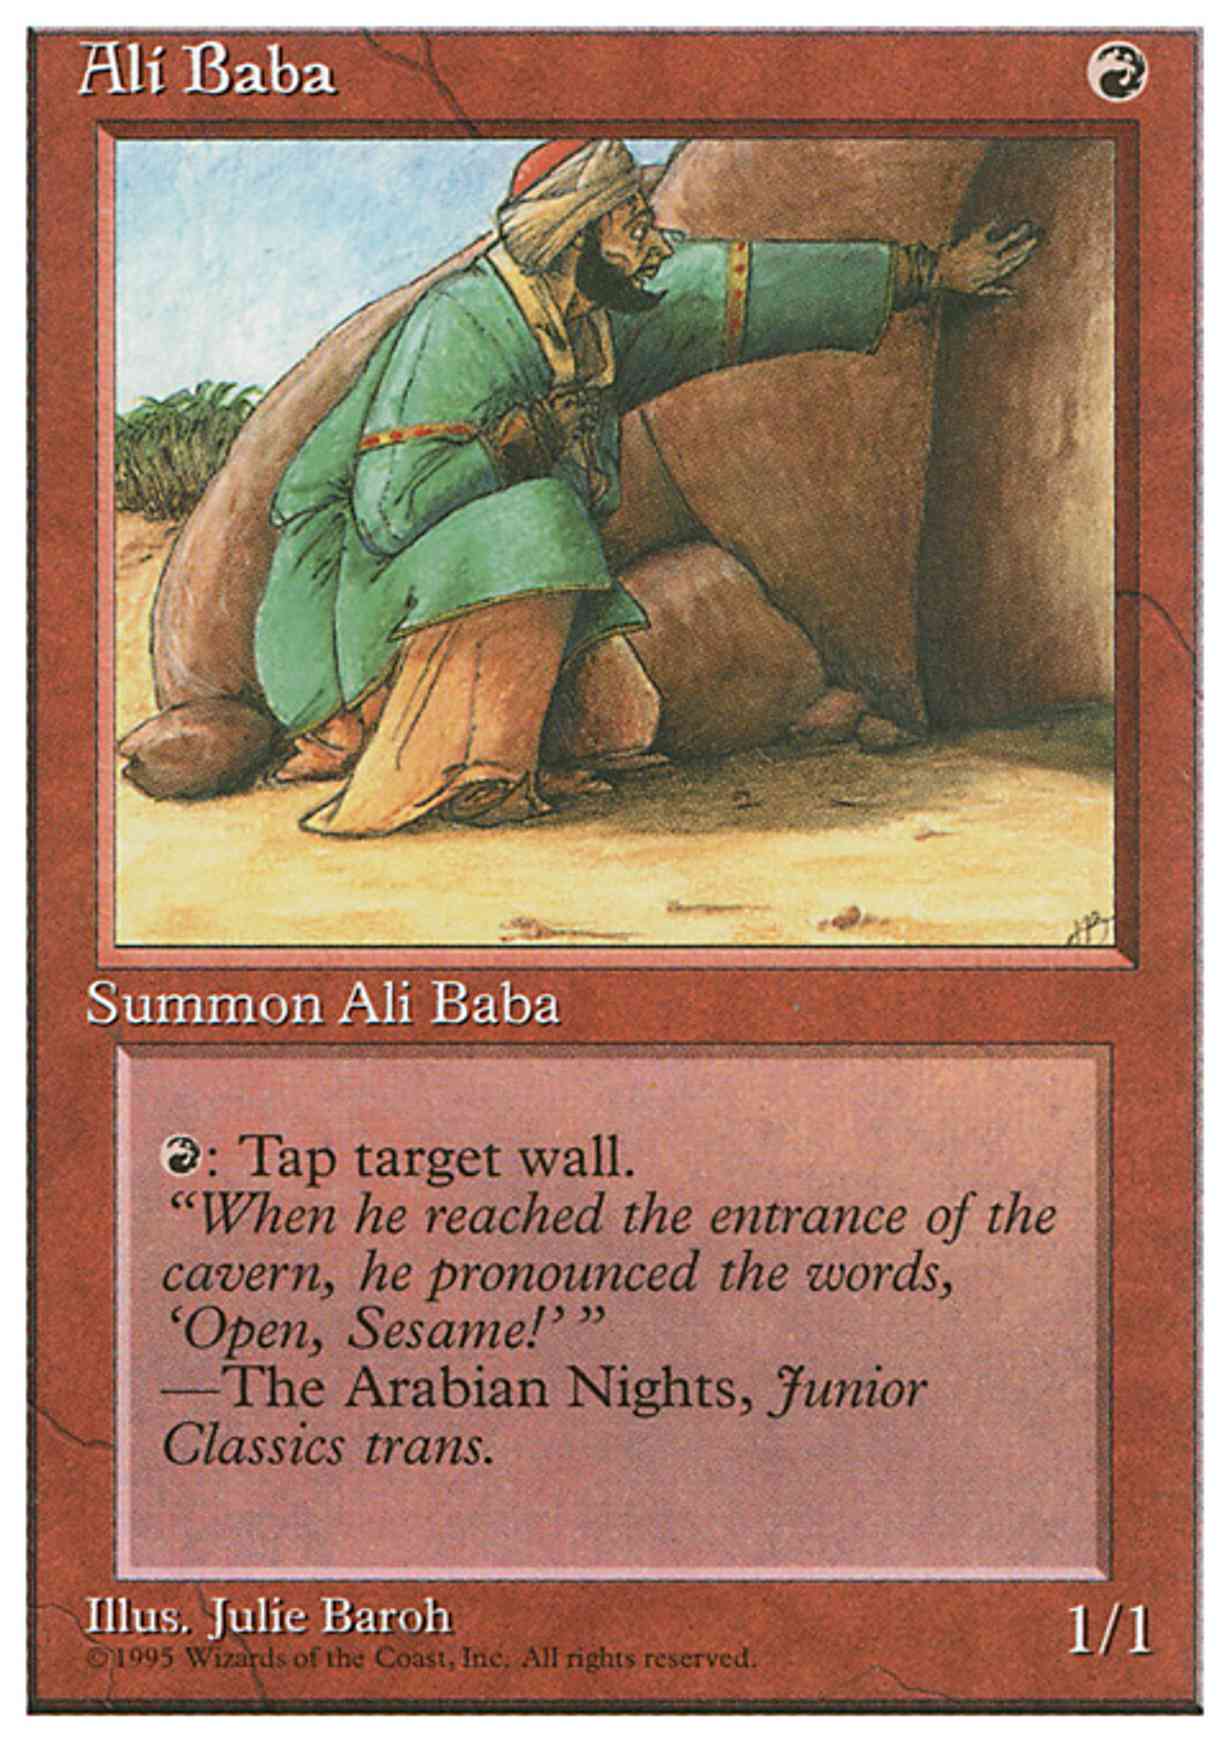 Ali Baba magic card front